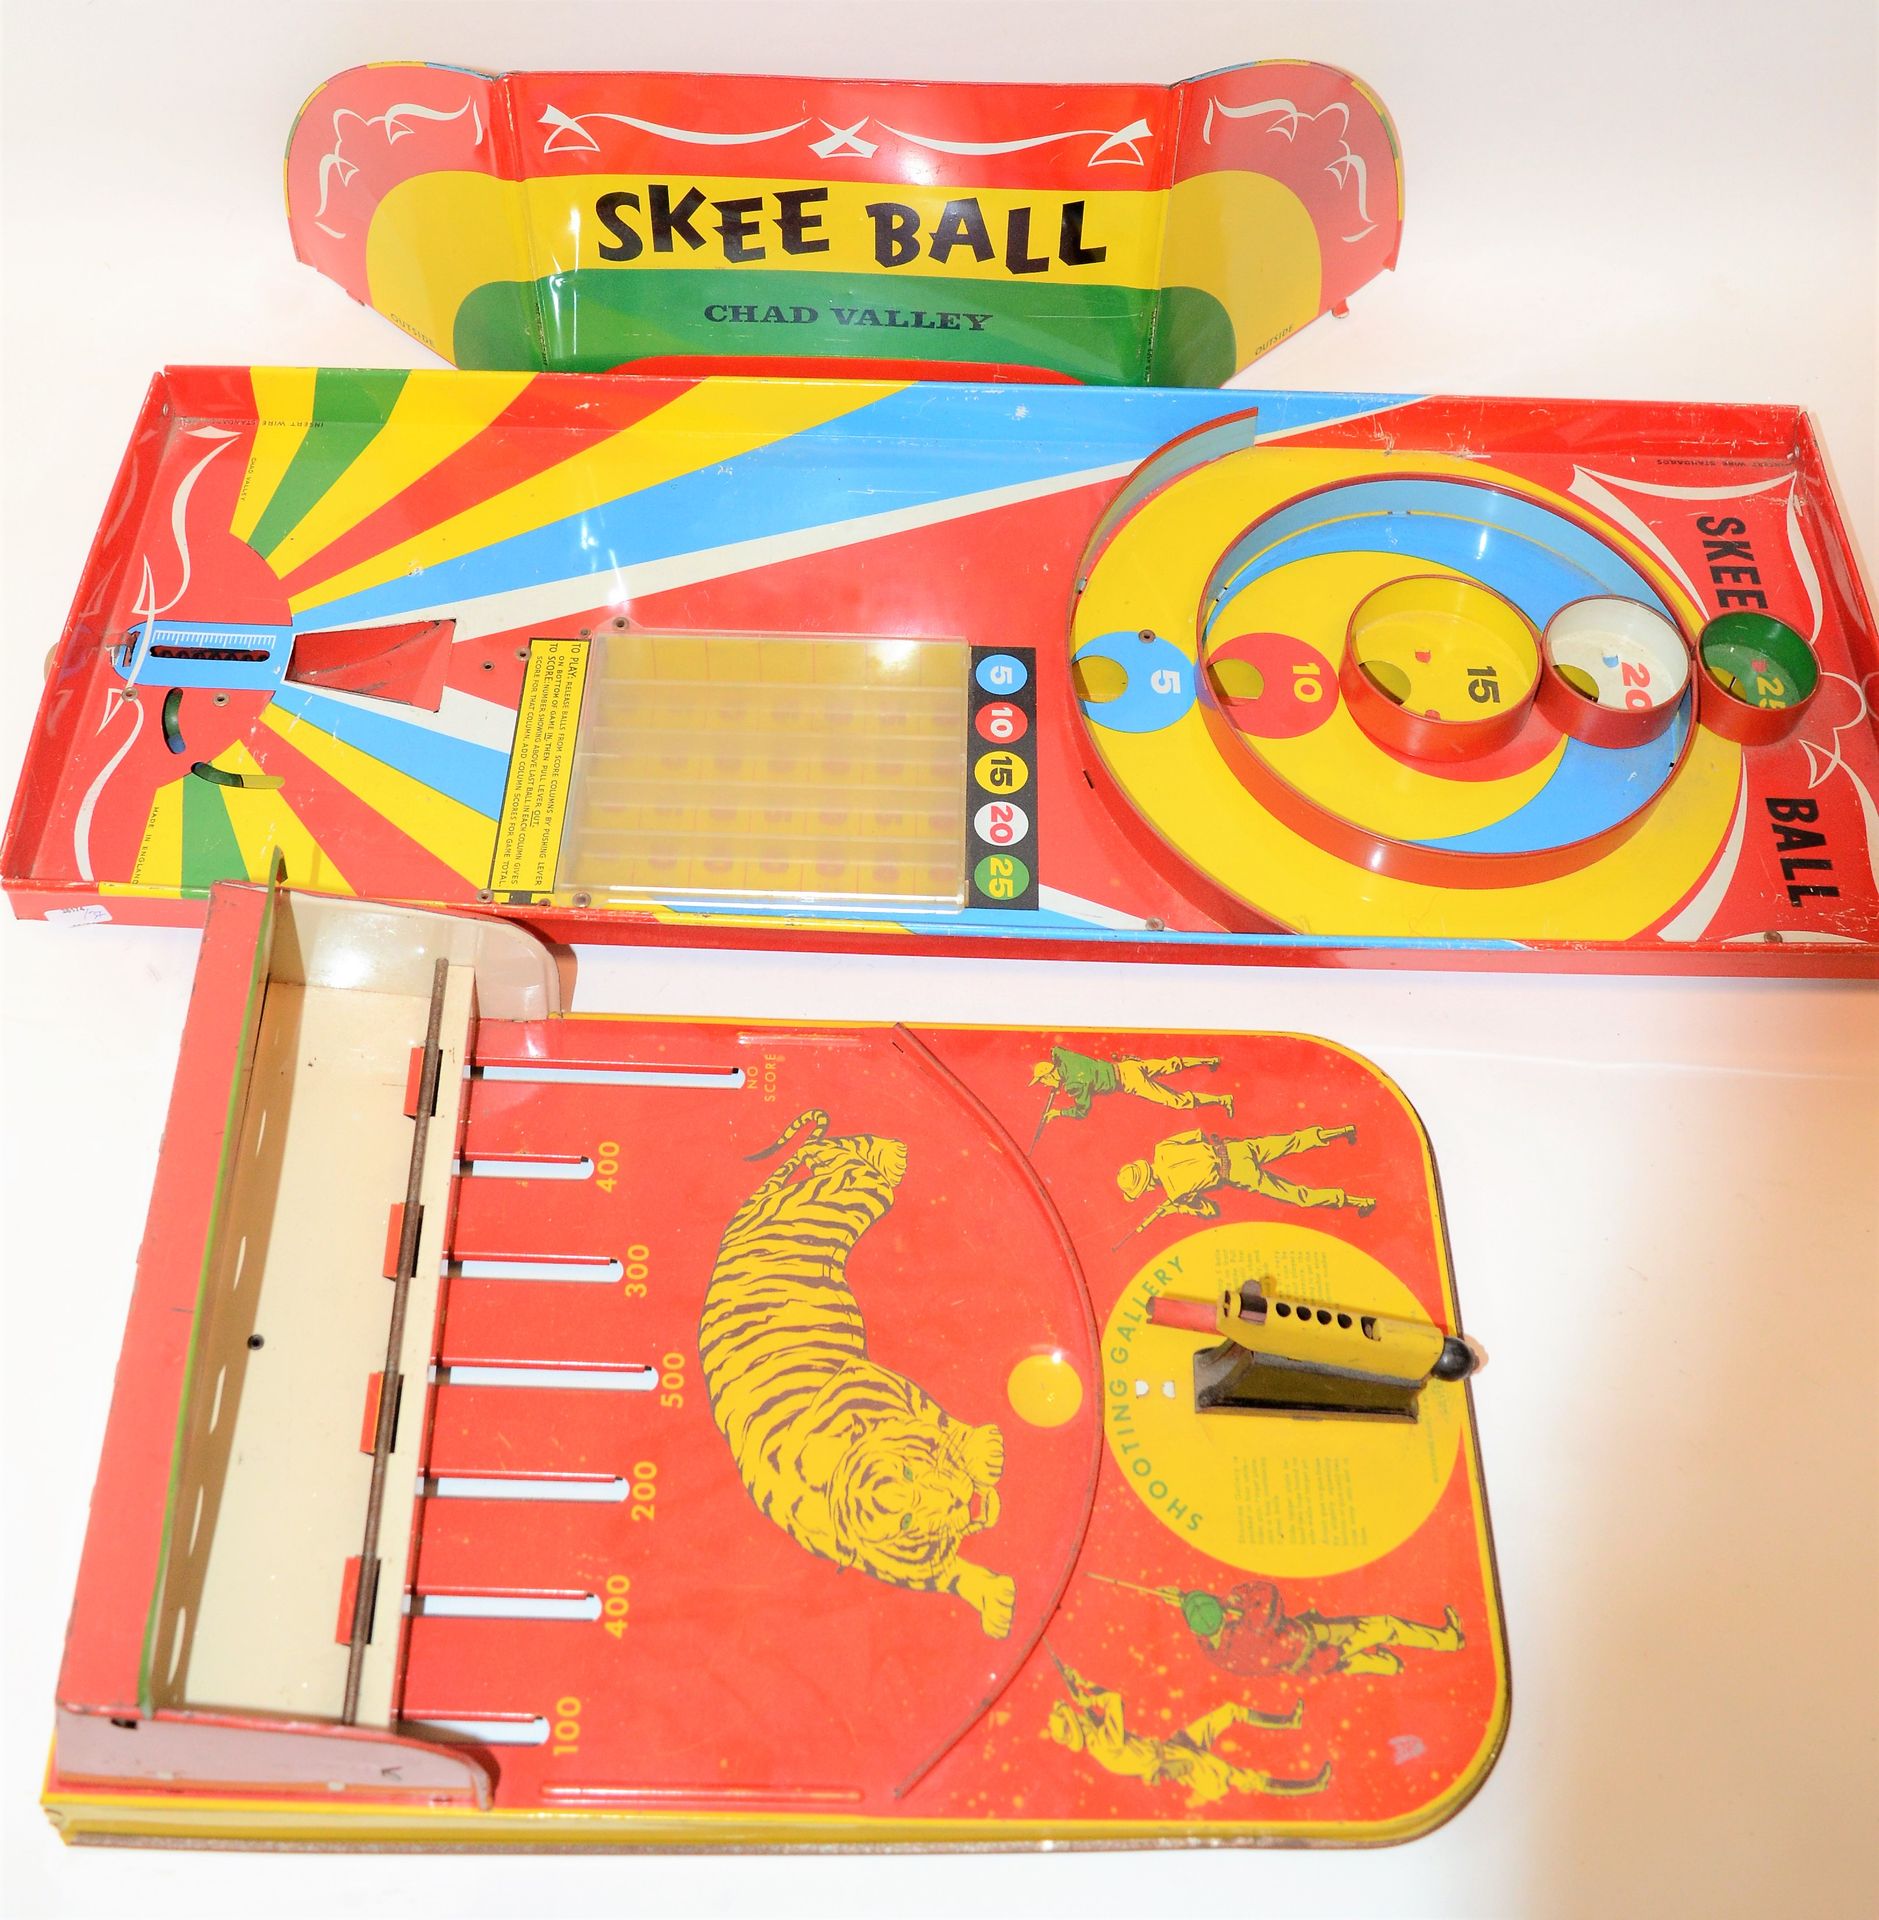 Null 两个技能游戏。

-CHAD VALLEY（英国）"Skee Ball "褪色的盒子，80 x 30厘米

-狼人》（美国）："射击馆" 46 x 2&hellip;